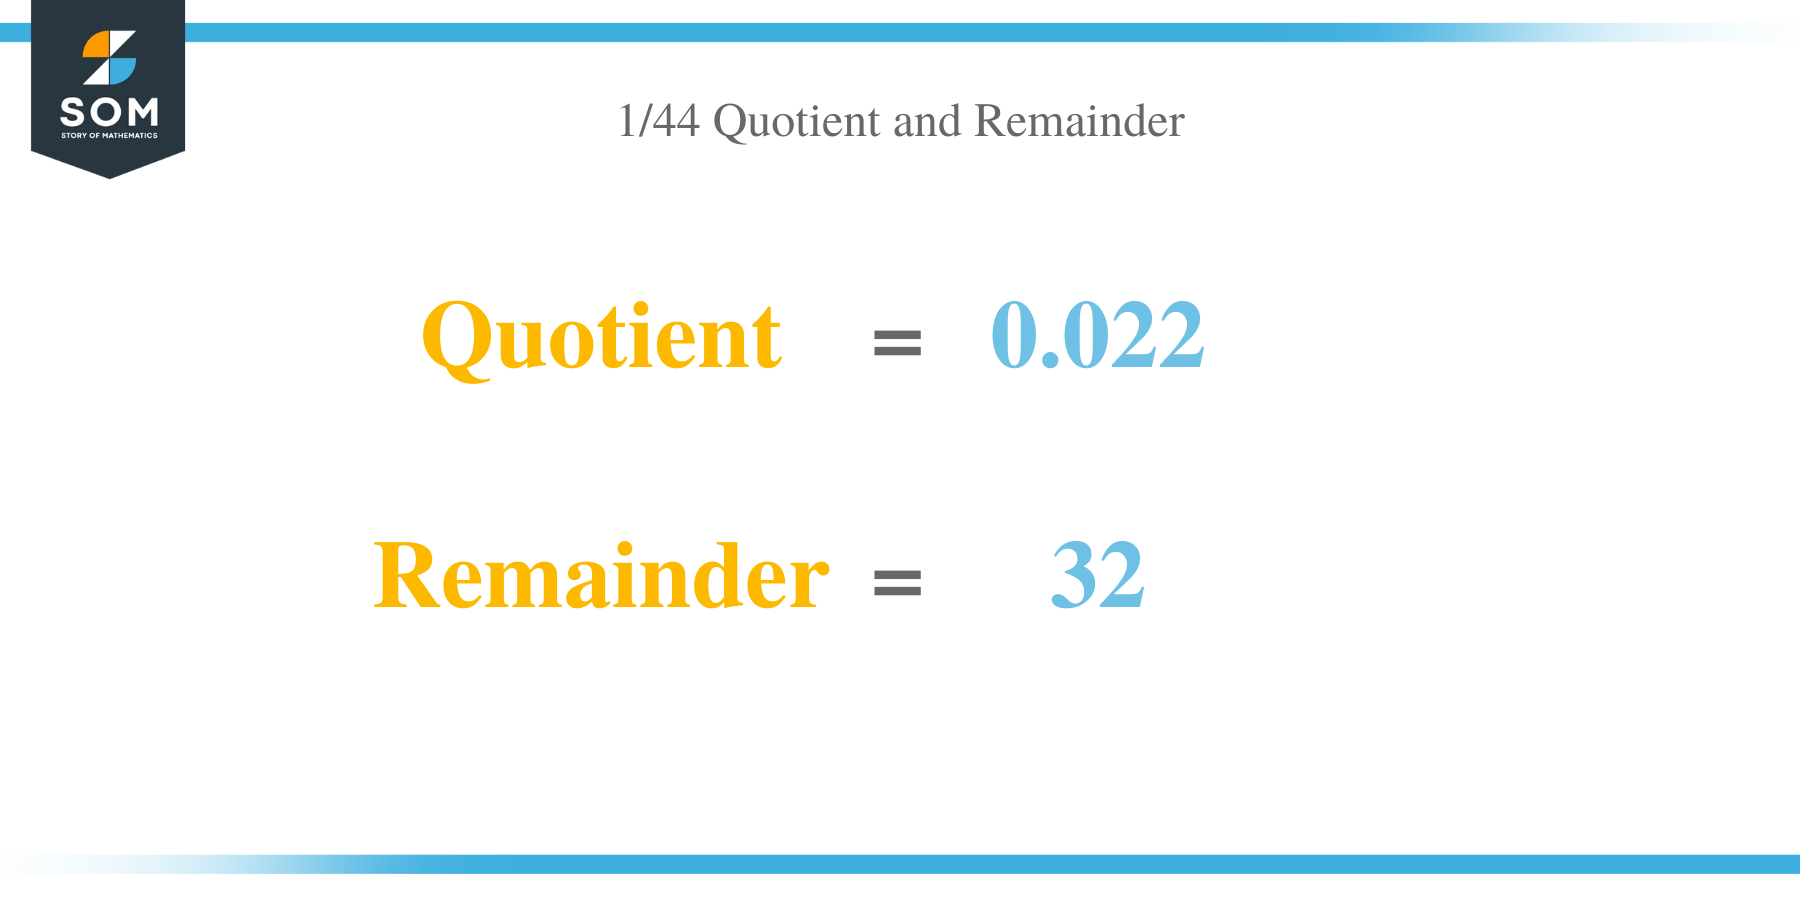 Quotient and Remainder of 1 per 44